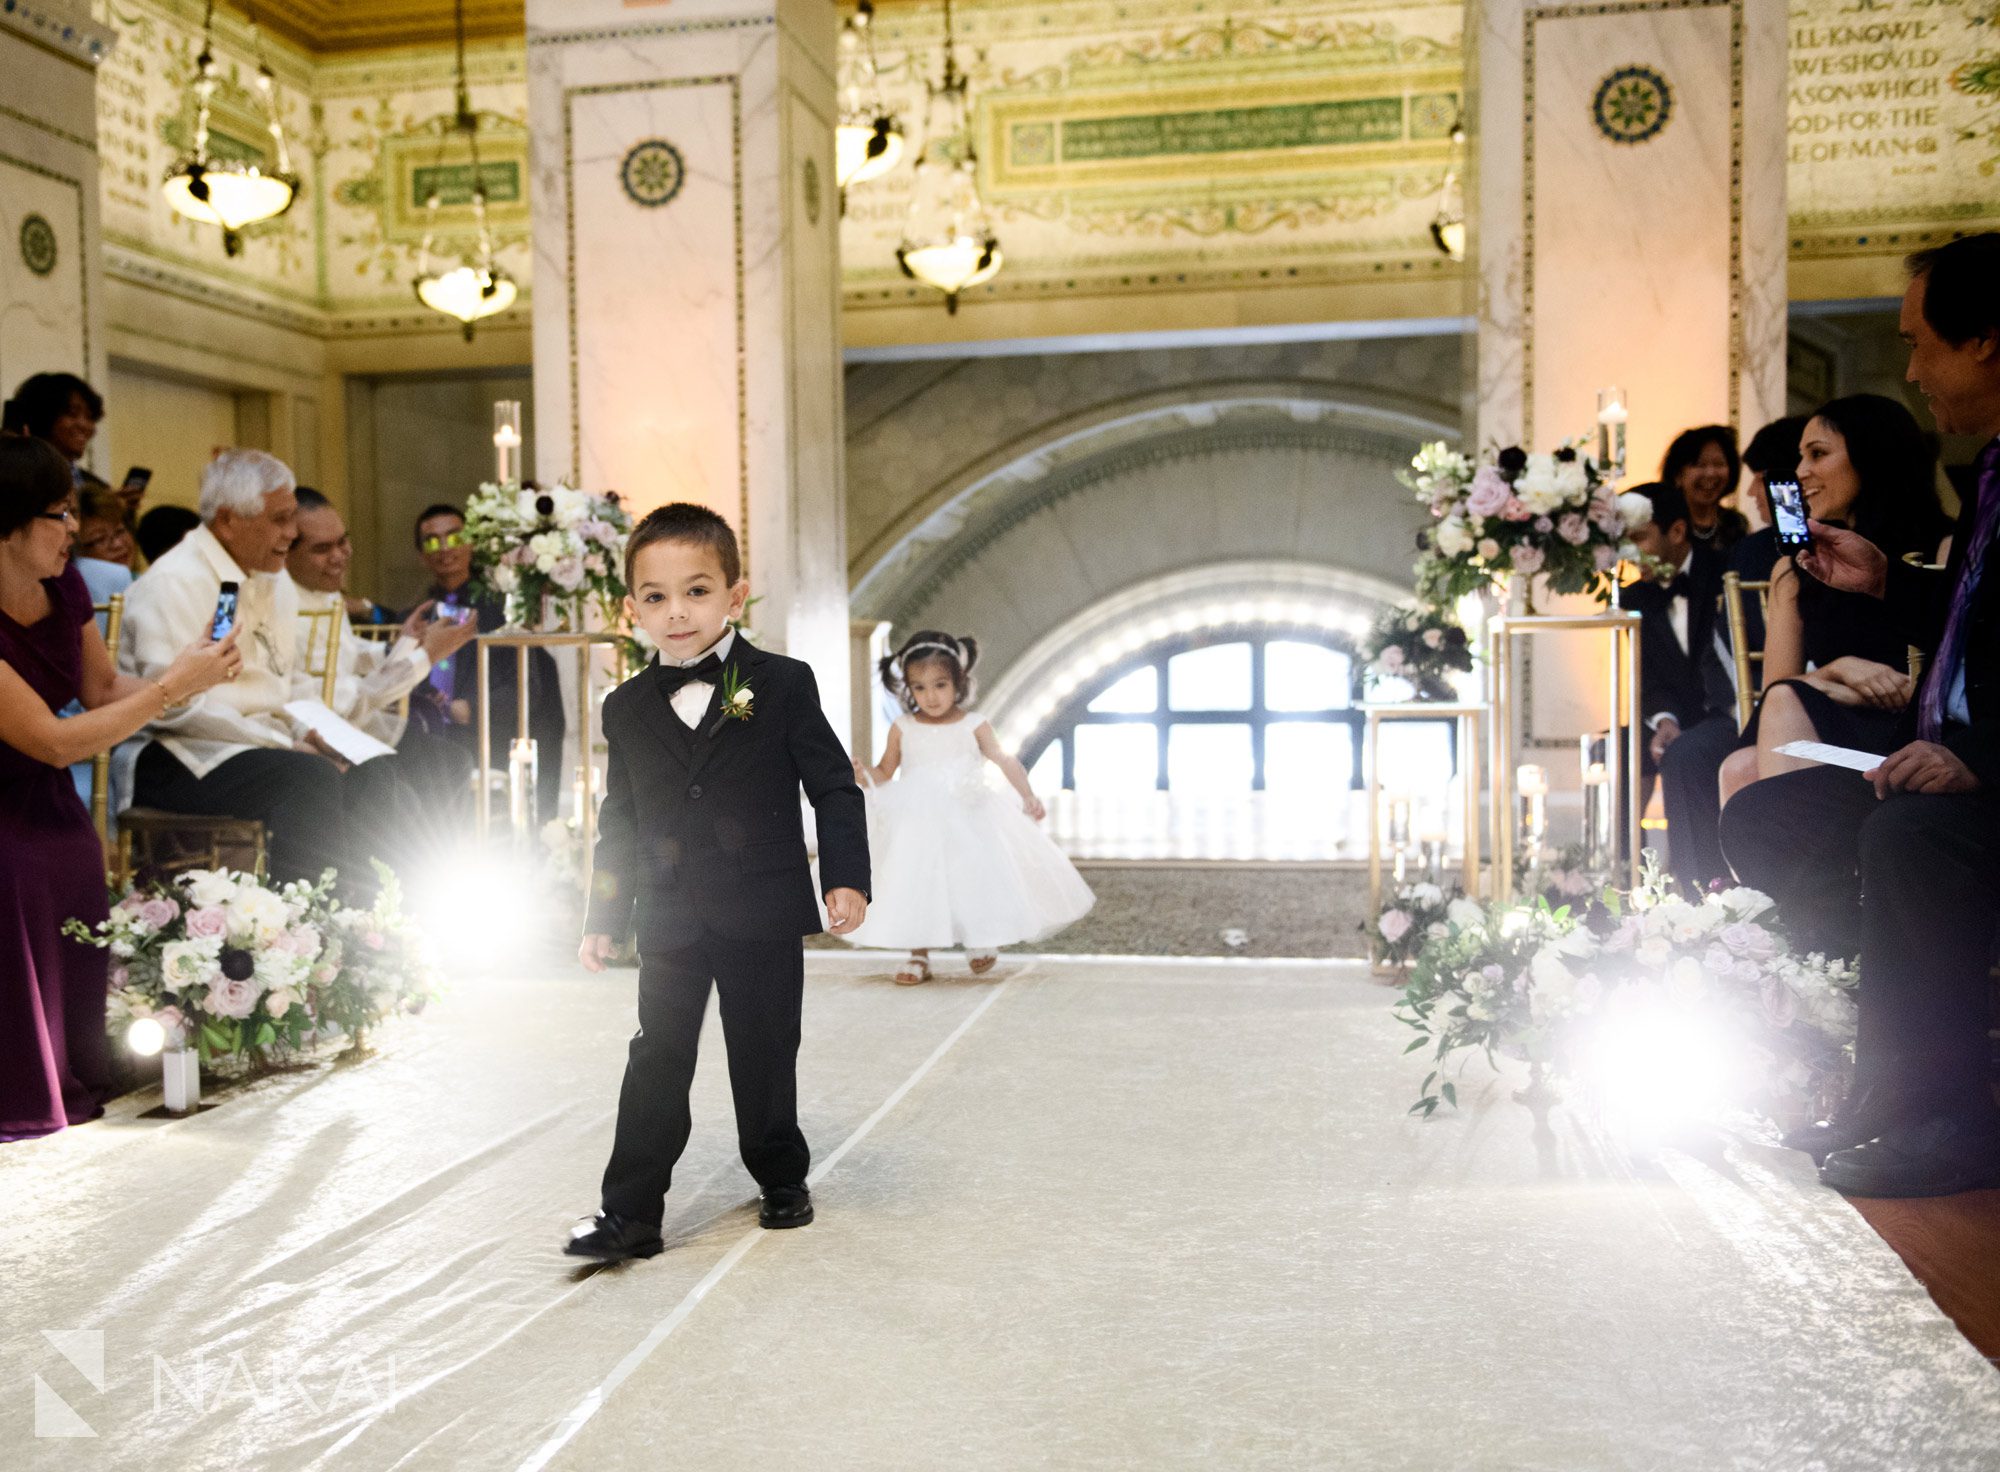 Chicago cultural wedding ceremony photos 